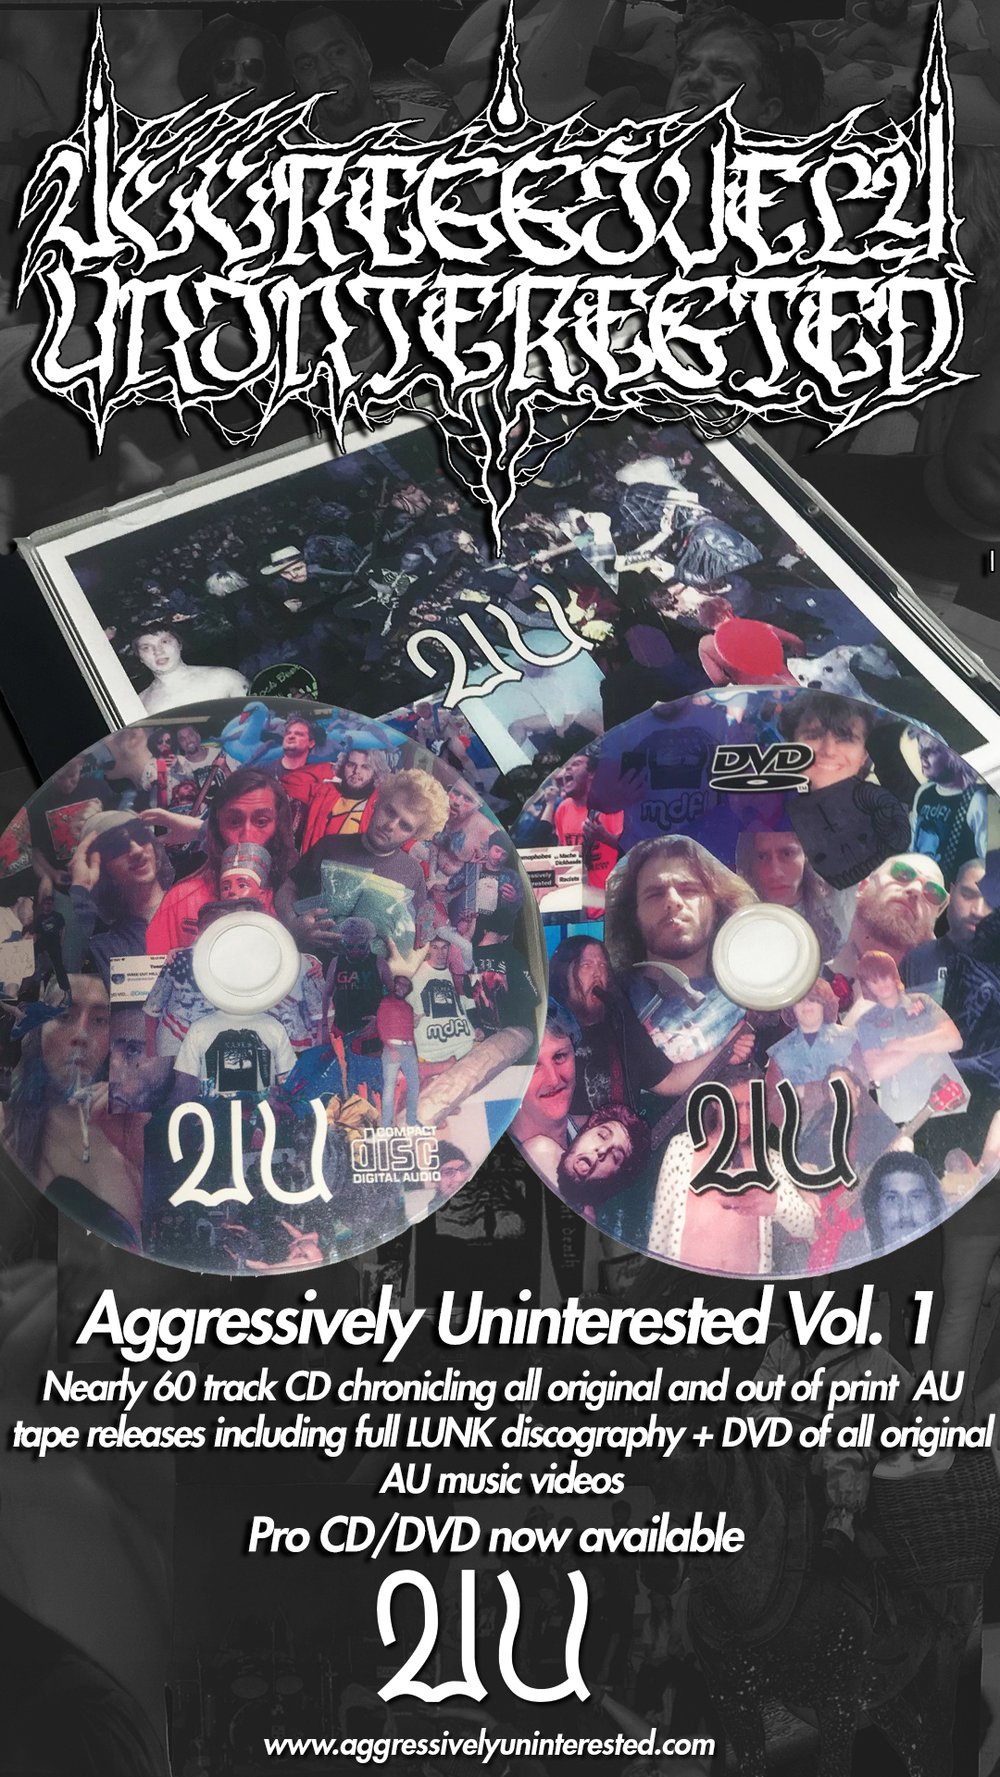 Aggressively Uninterested Volume 1. pro CD/DVD